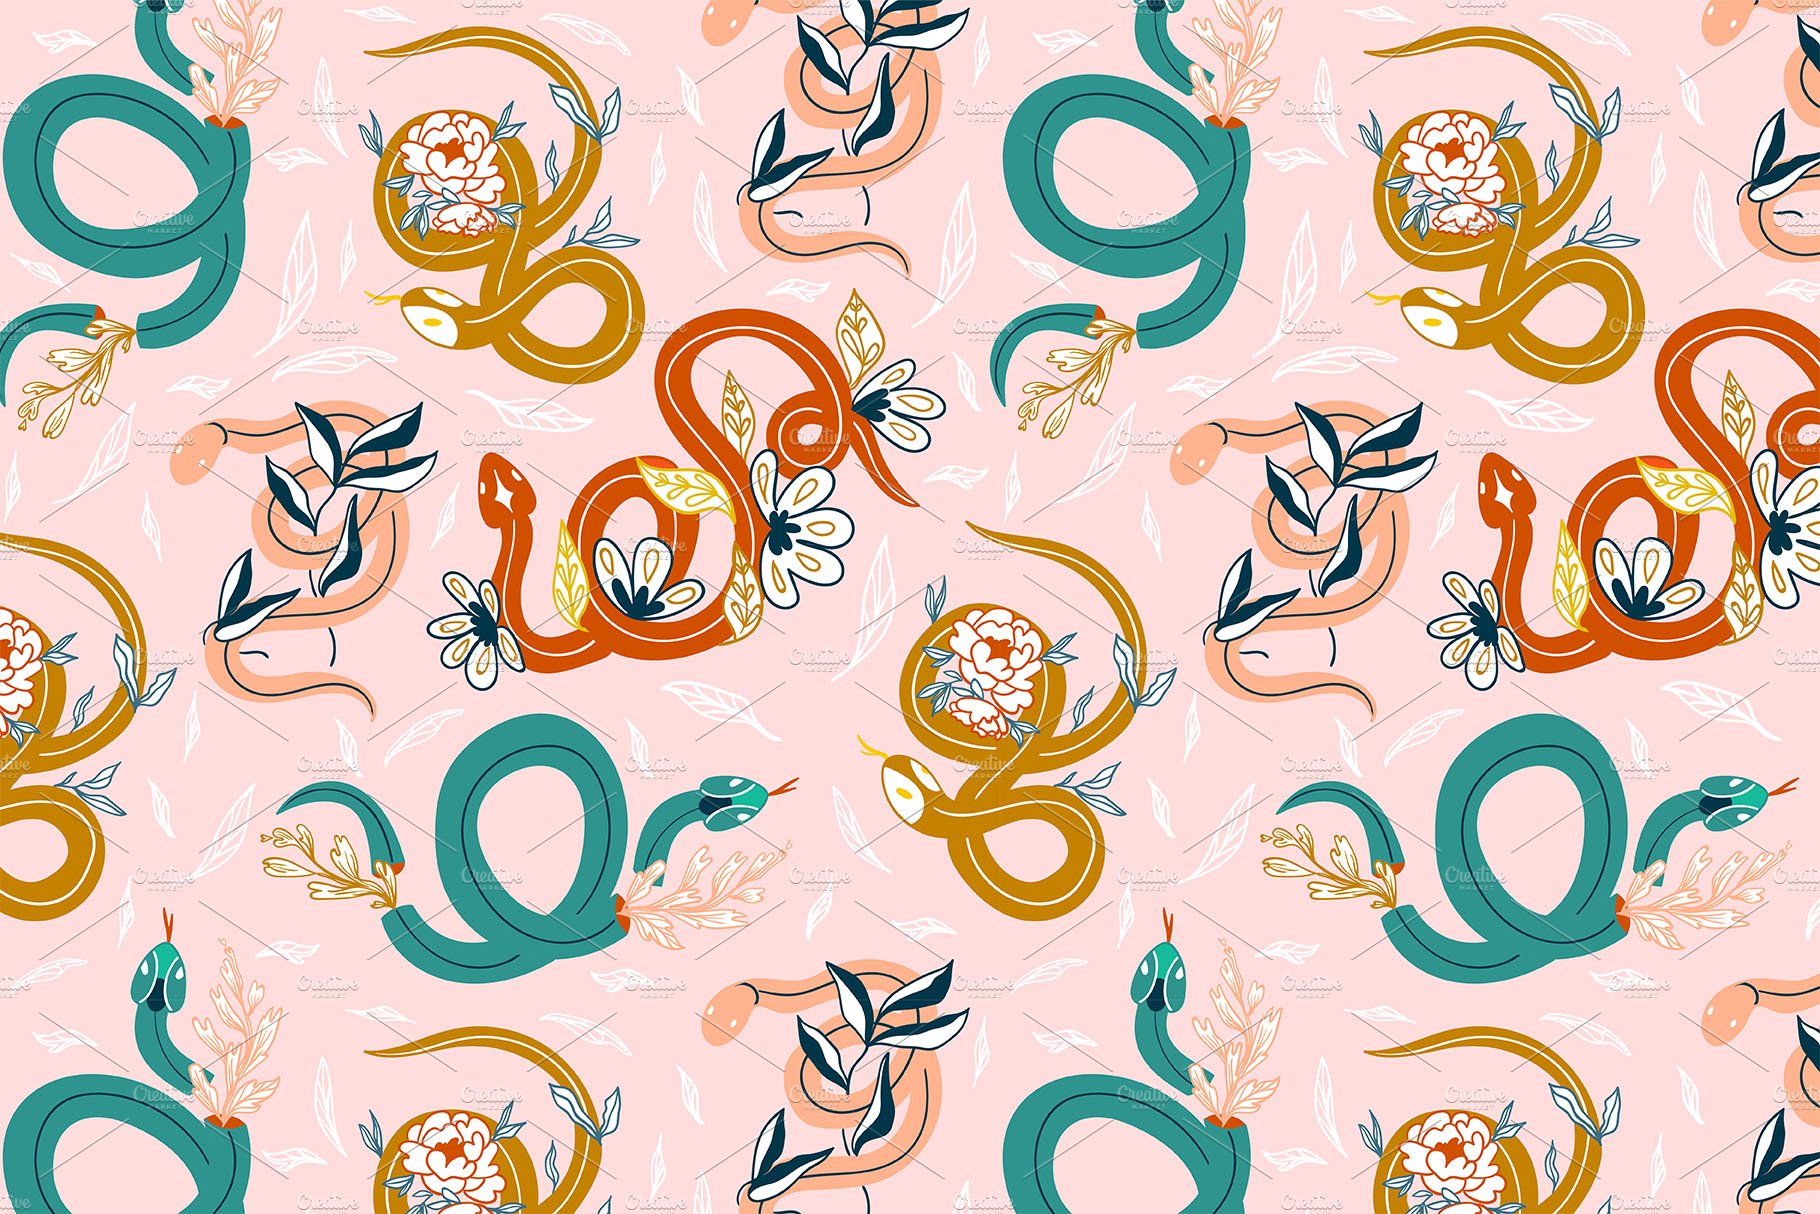 Pastel snake illustration in Asian style.